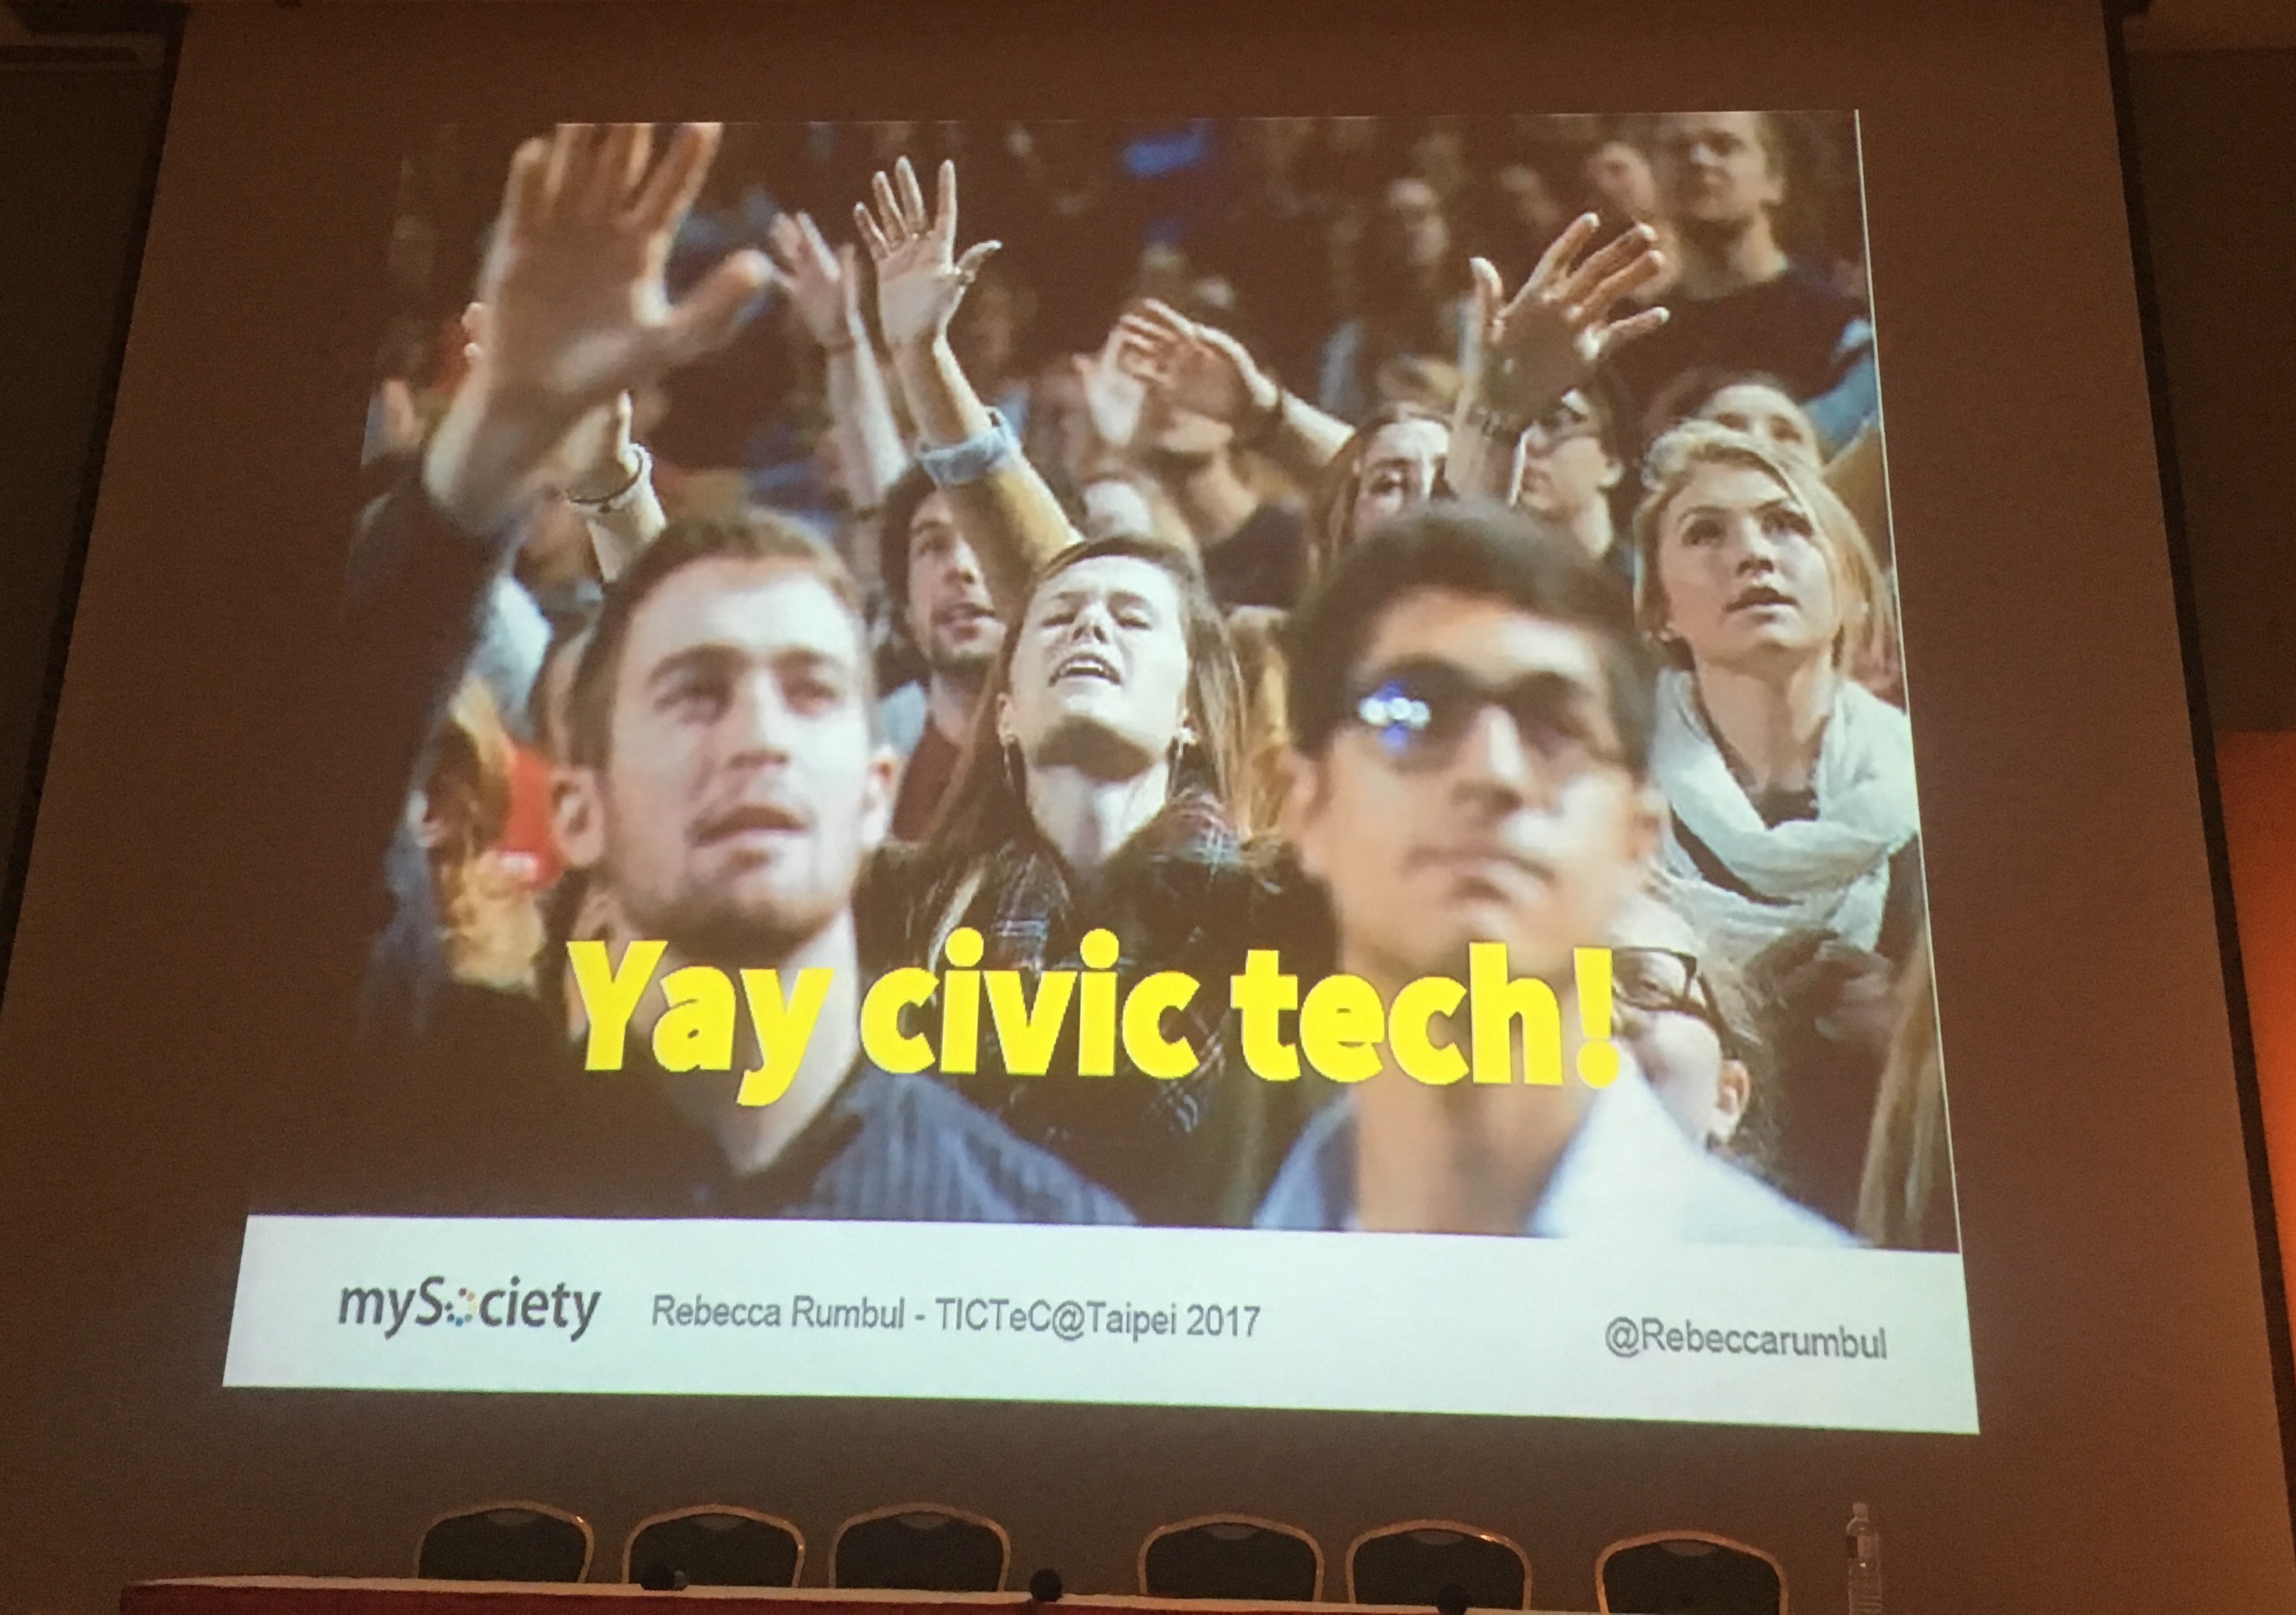 Yay civic tech!